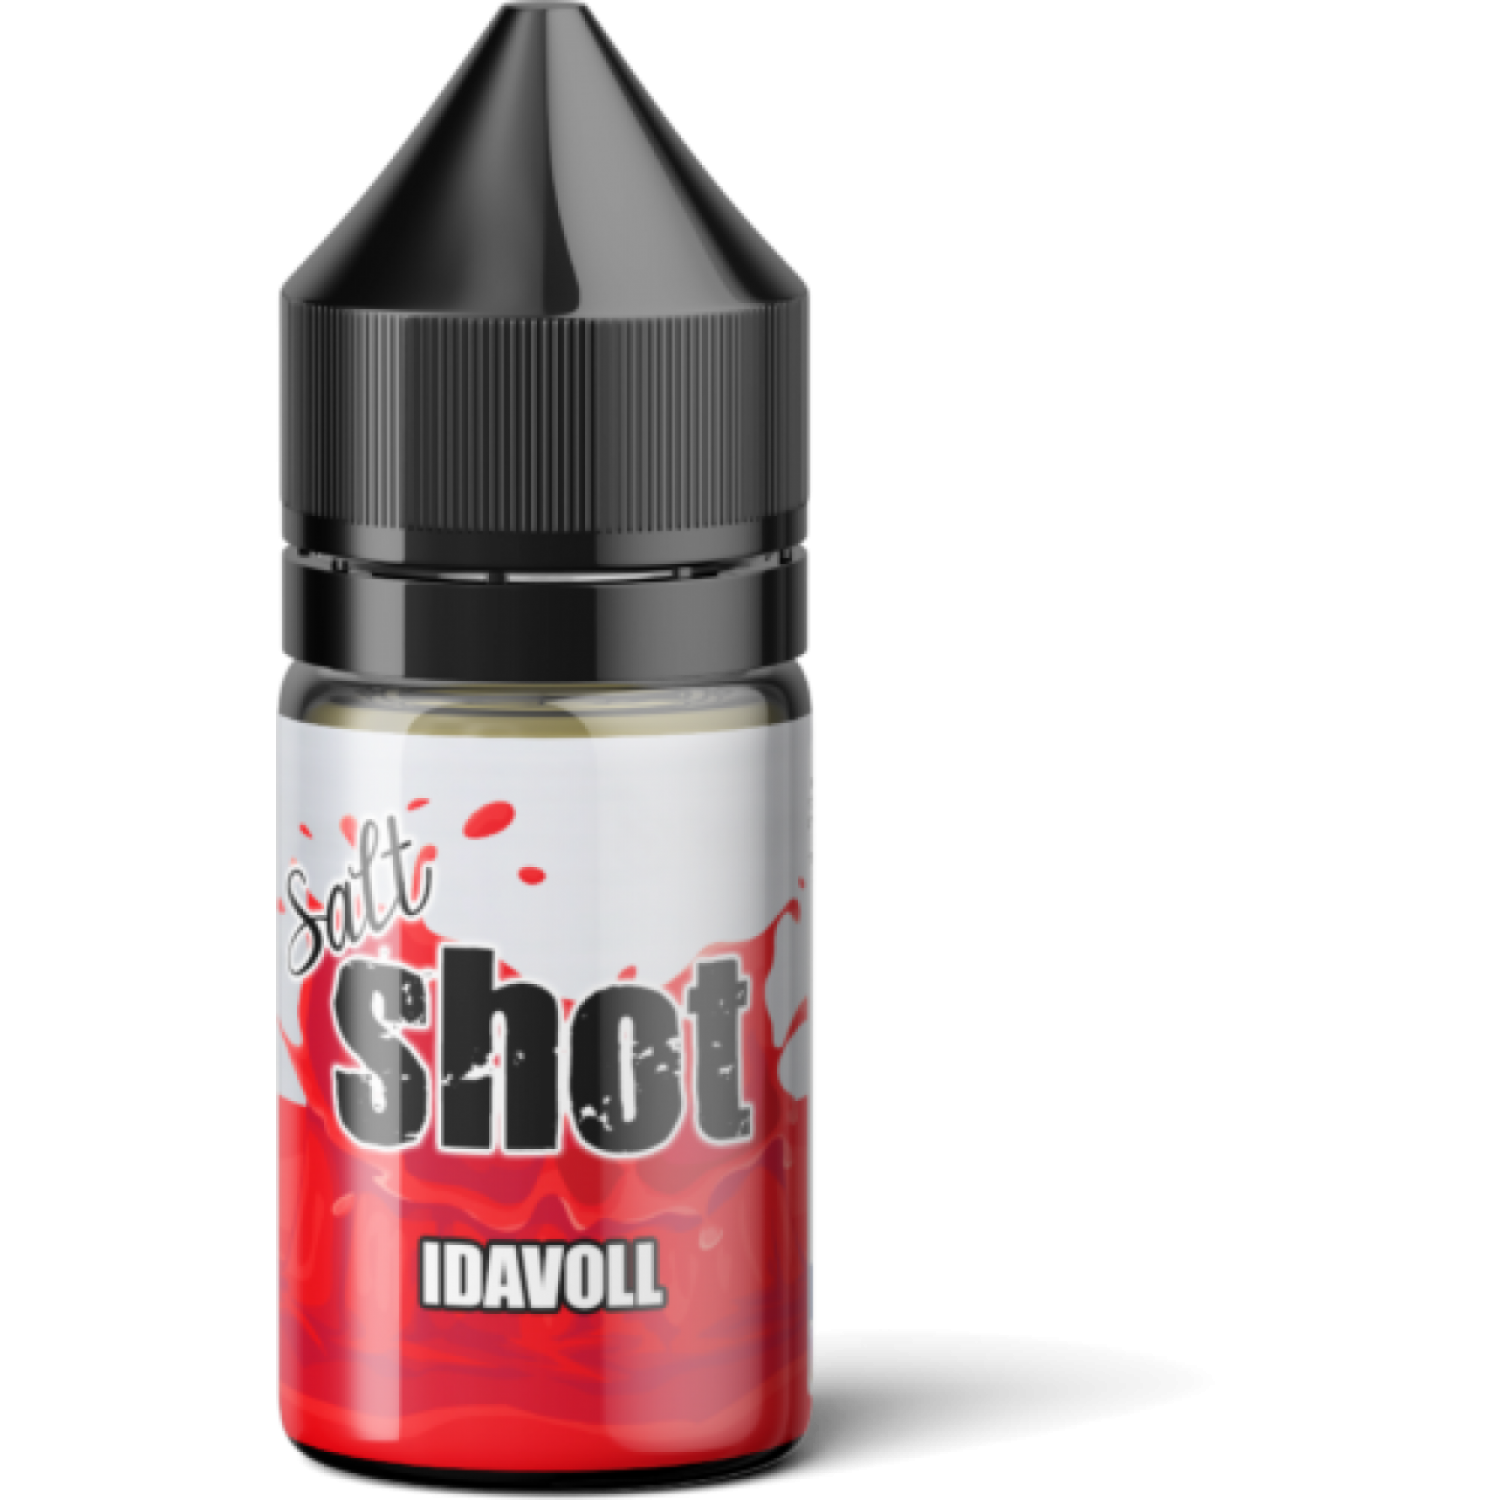 Shot - Idavoll 30 ml Premium Salt Likit